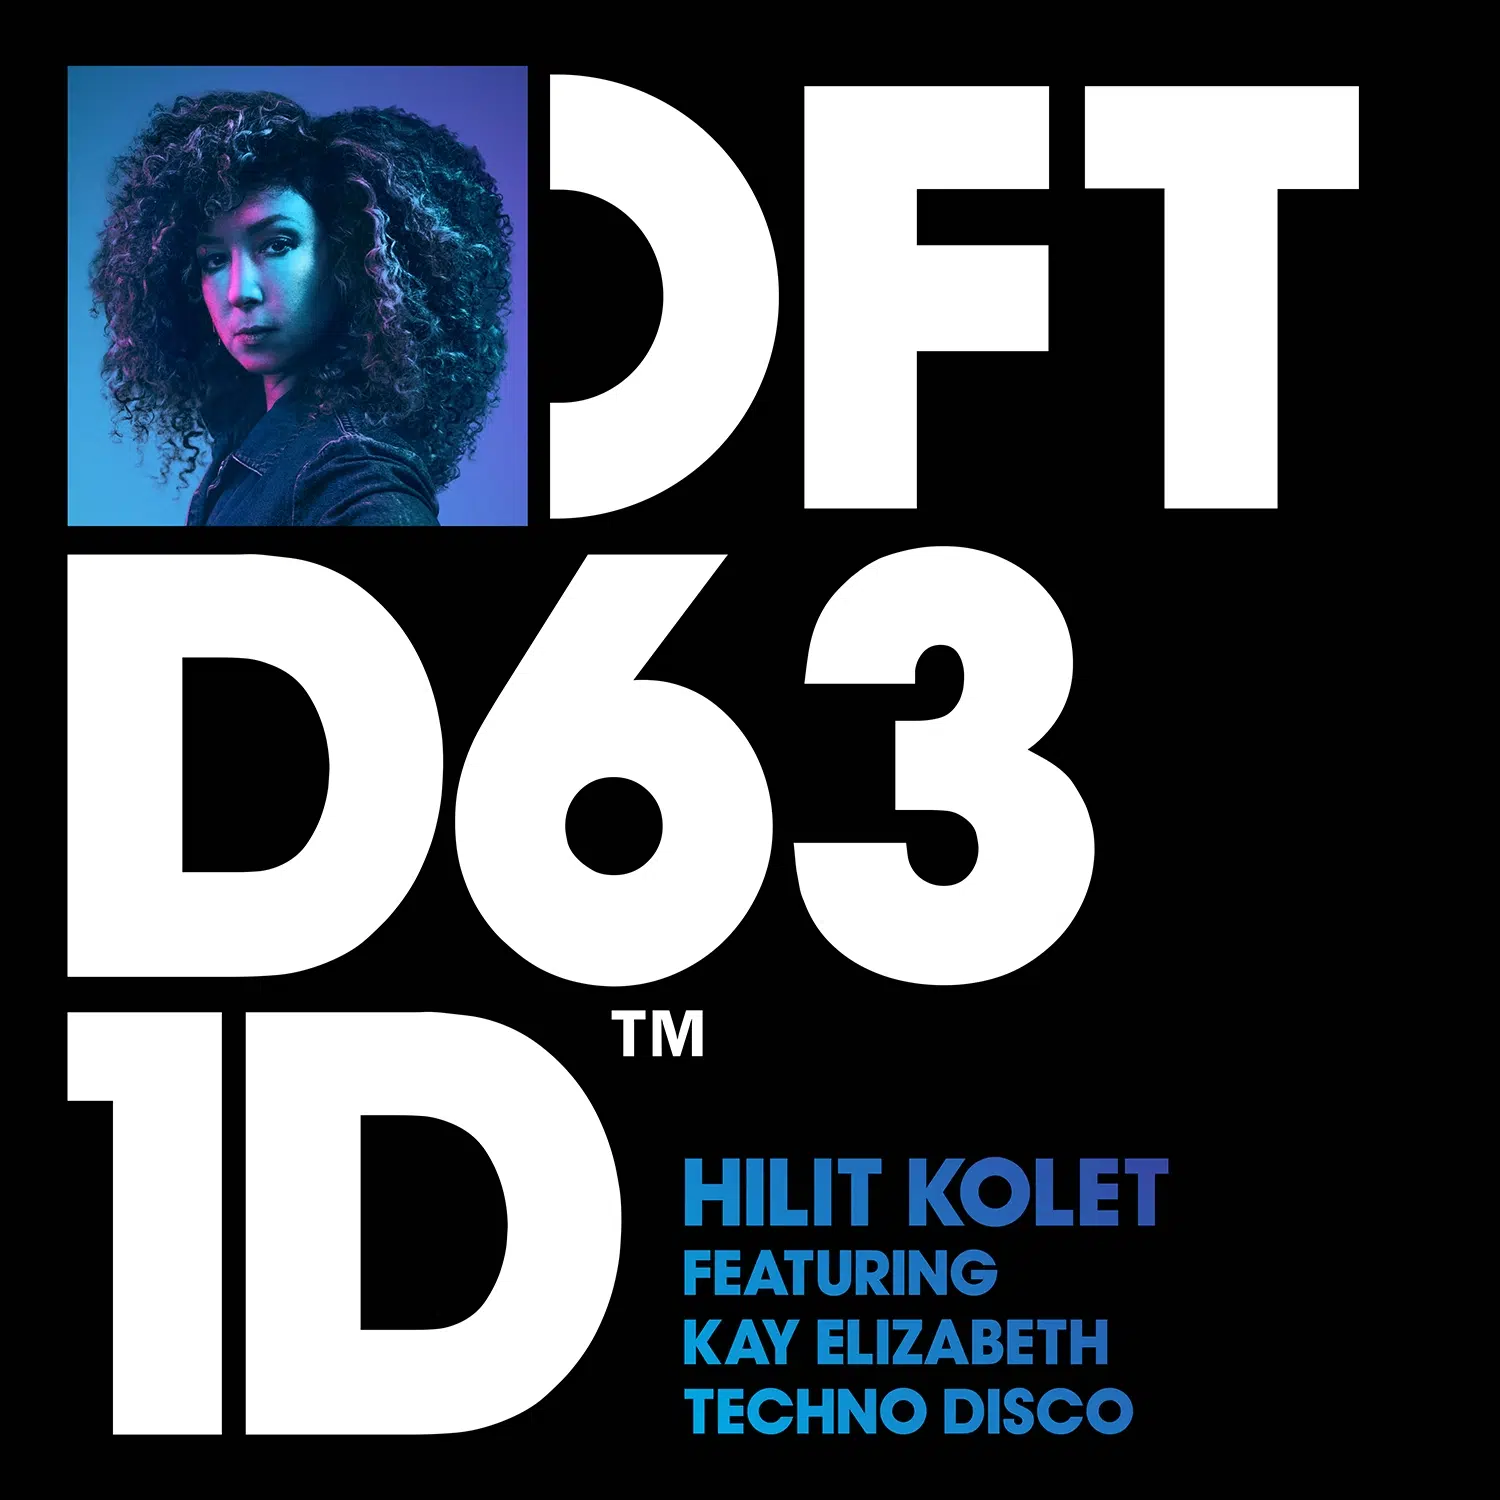 Hilit Kolet “Techno Disco”